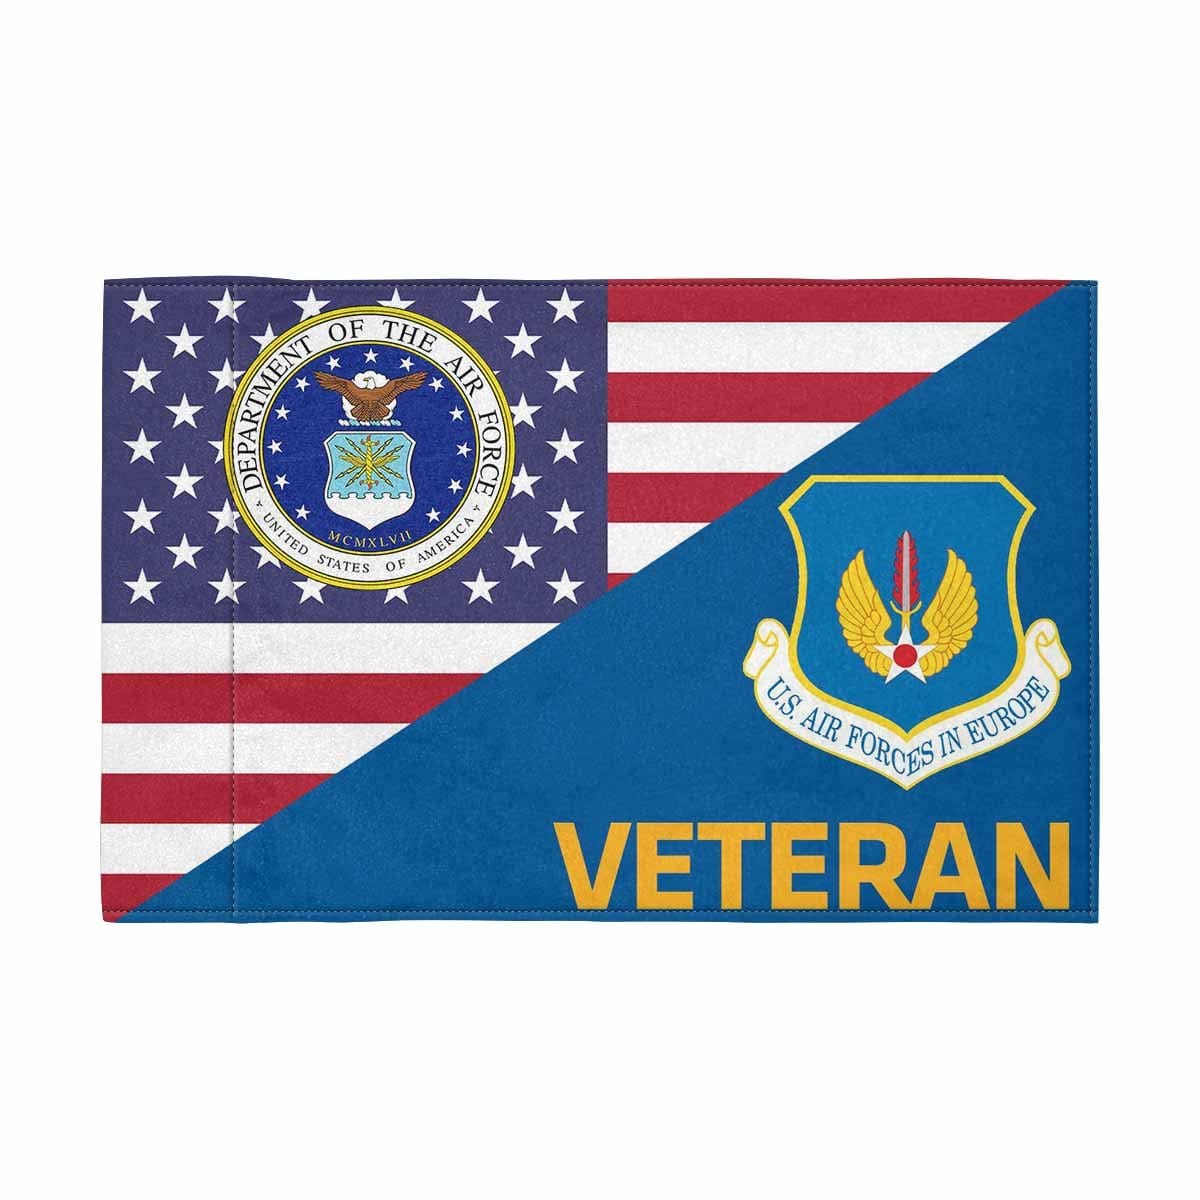 US Air Force in Europe Veteran Motorcycle Flag 9" x 6" Twin-Side Printing D01-MotorcycleFlag-USAF-Veterans Nation